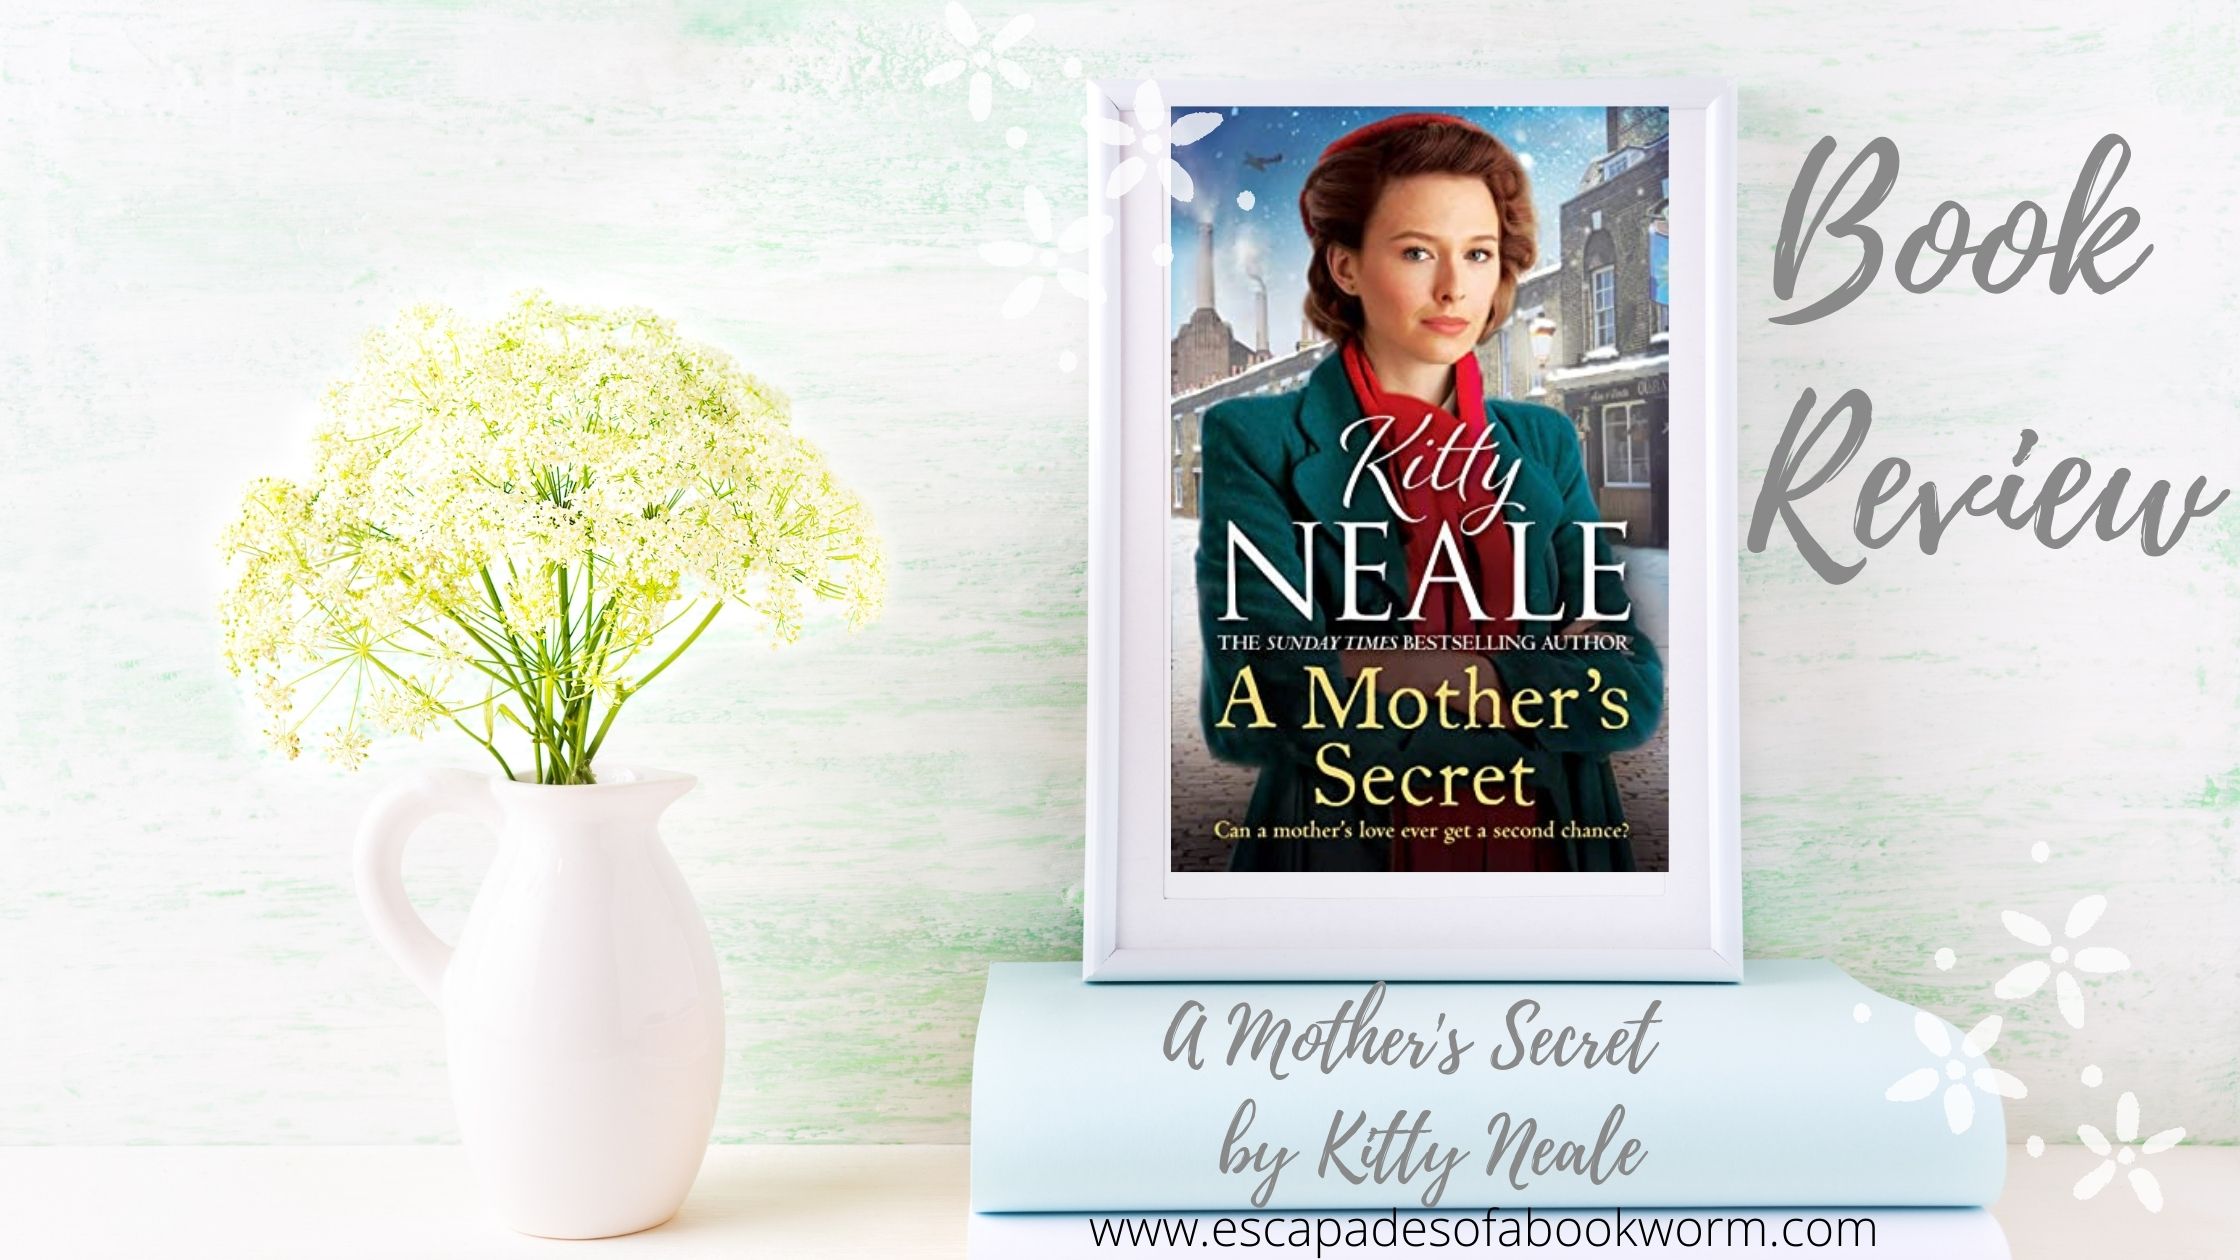 A Mother's Secret by Kitty Neale